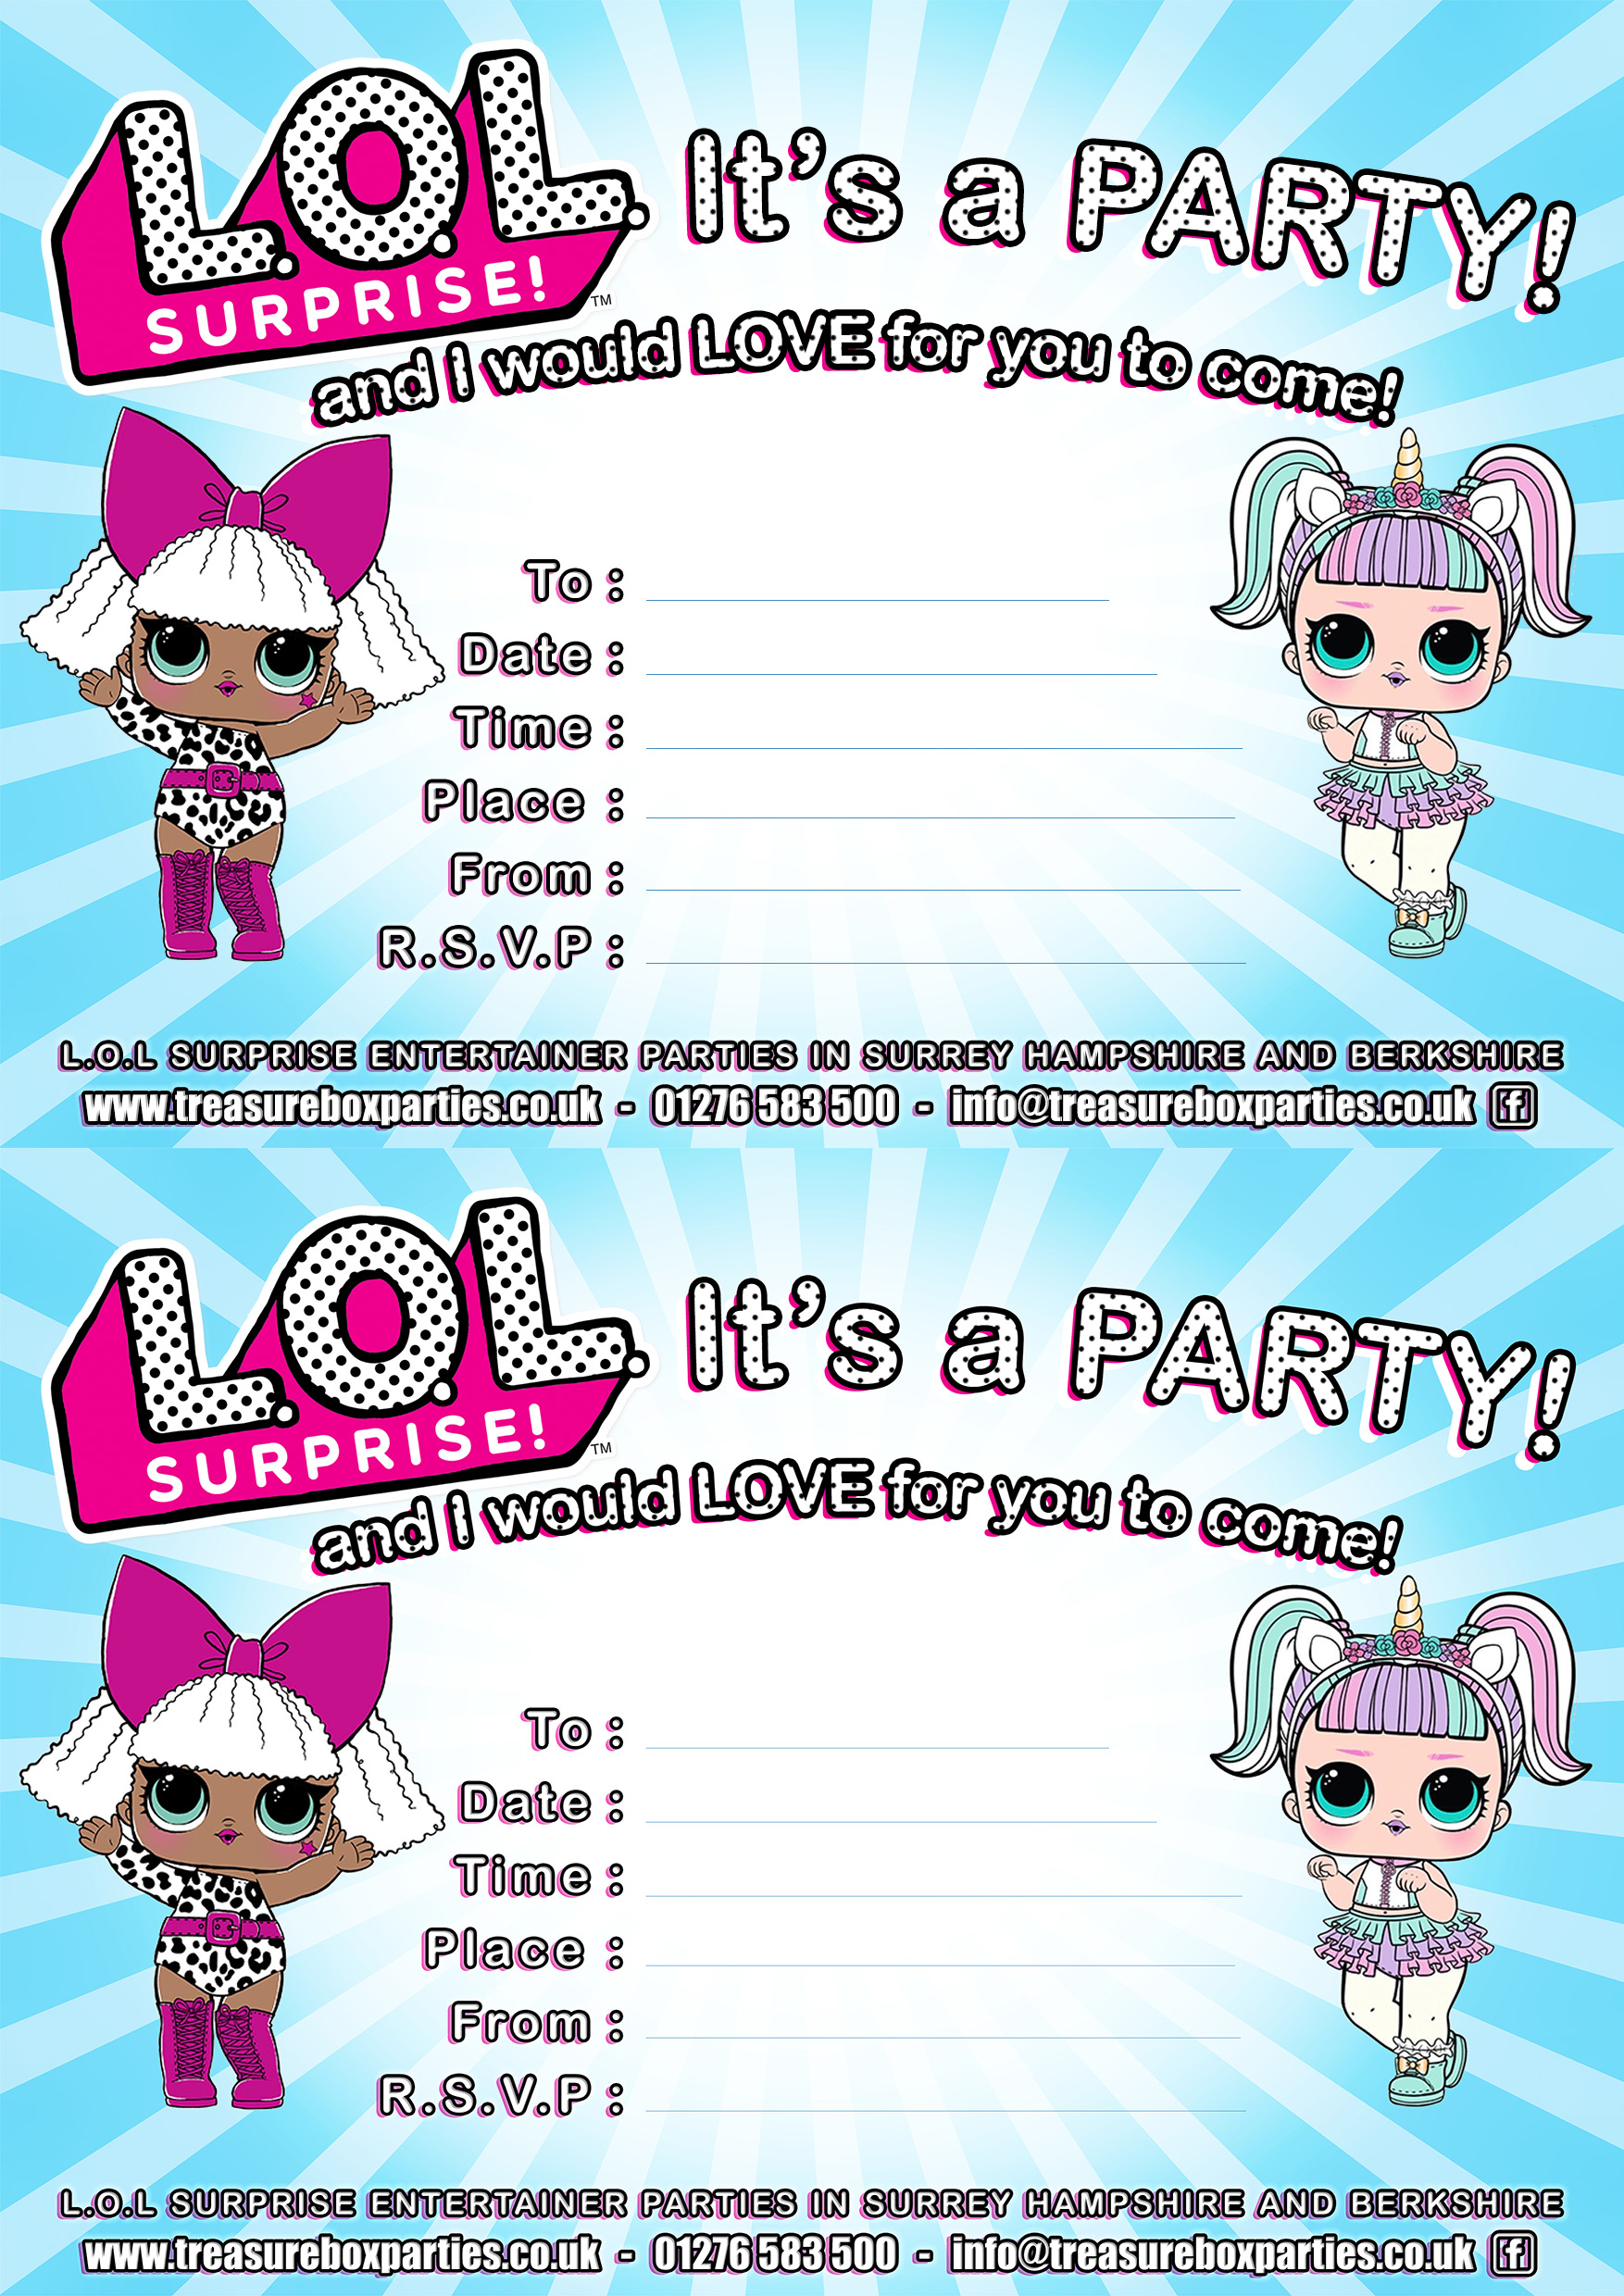 lol party downloads - childrens entertainer parties surrey